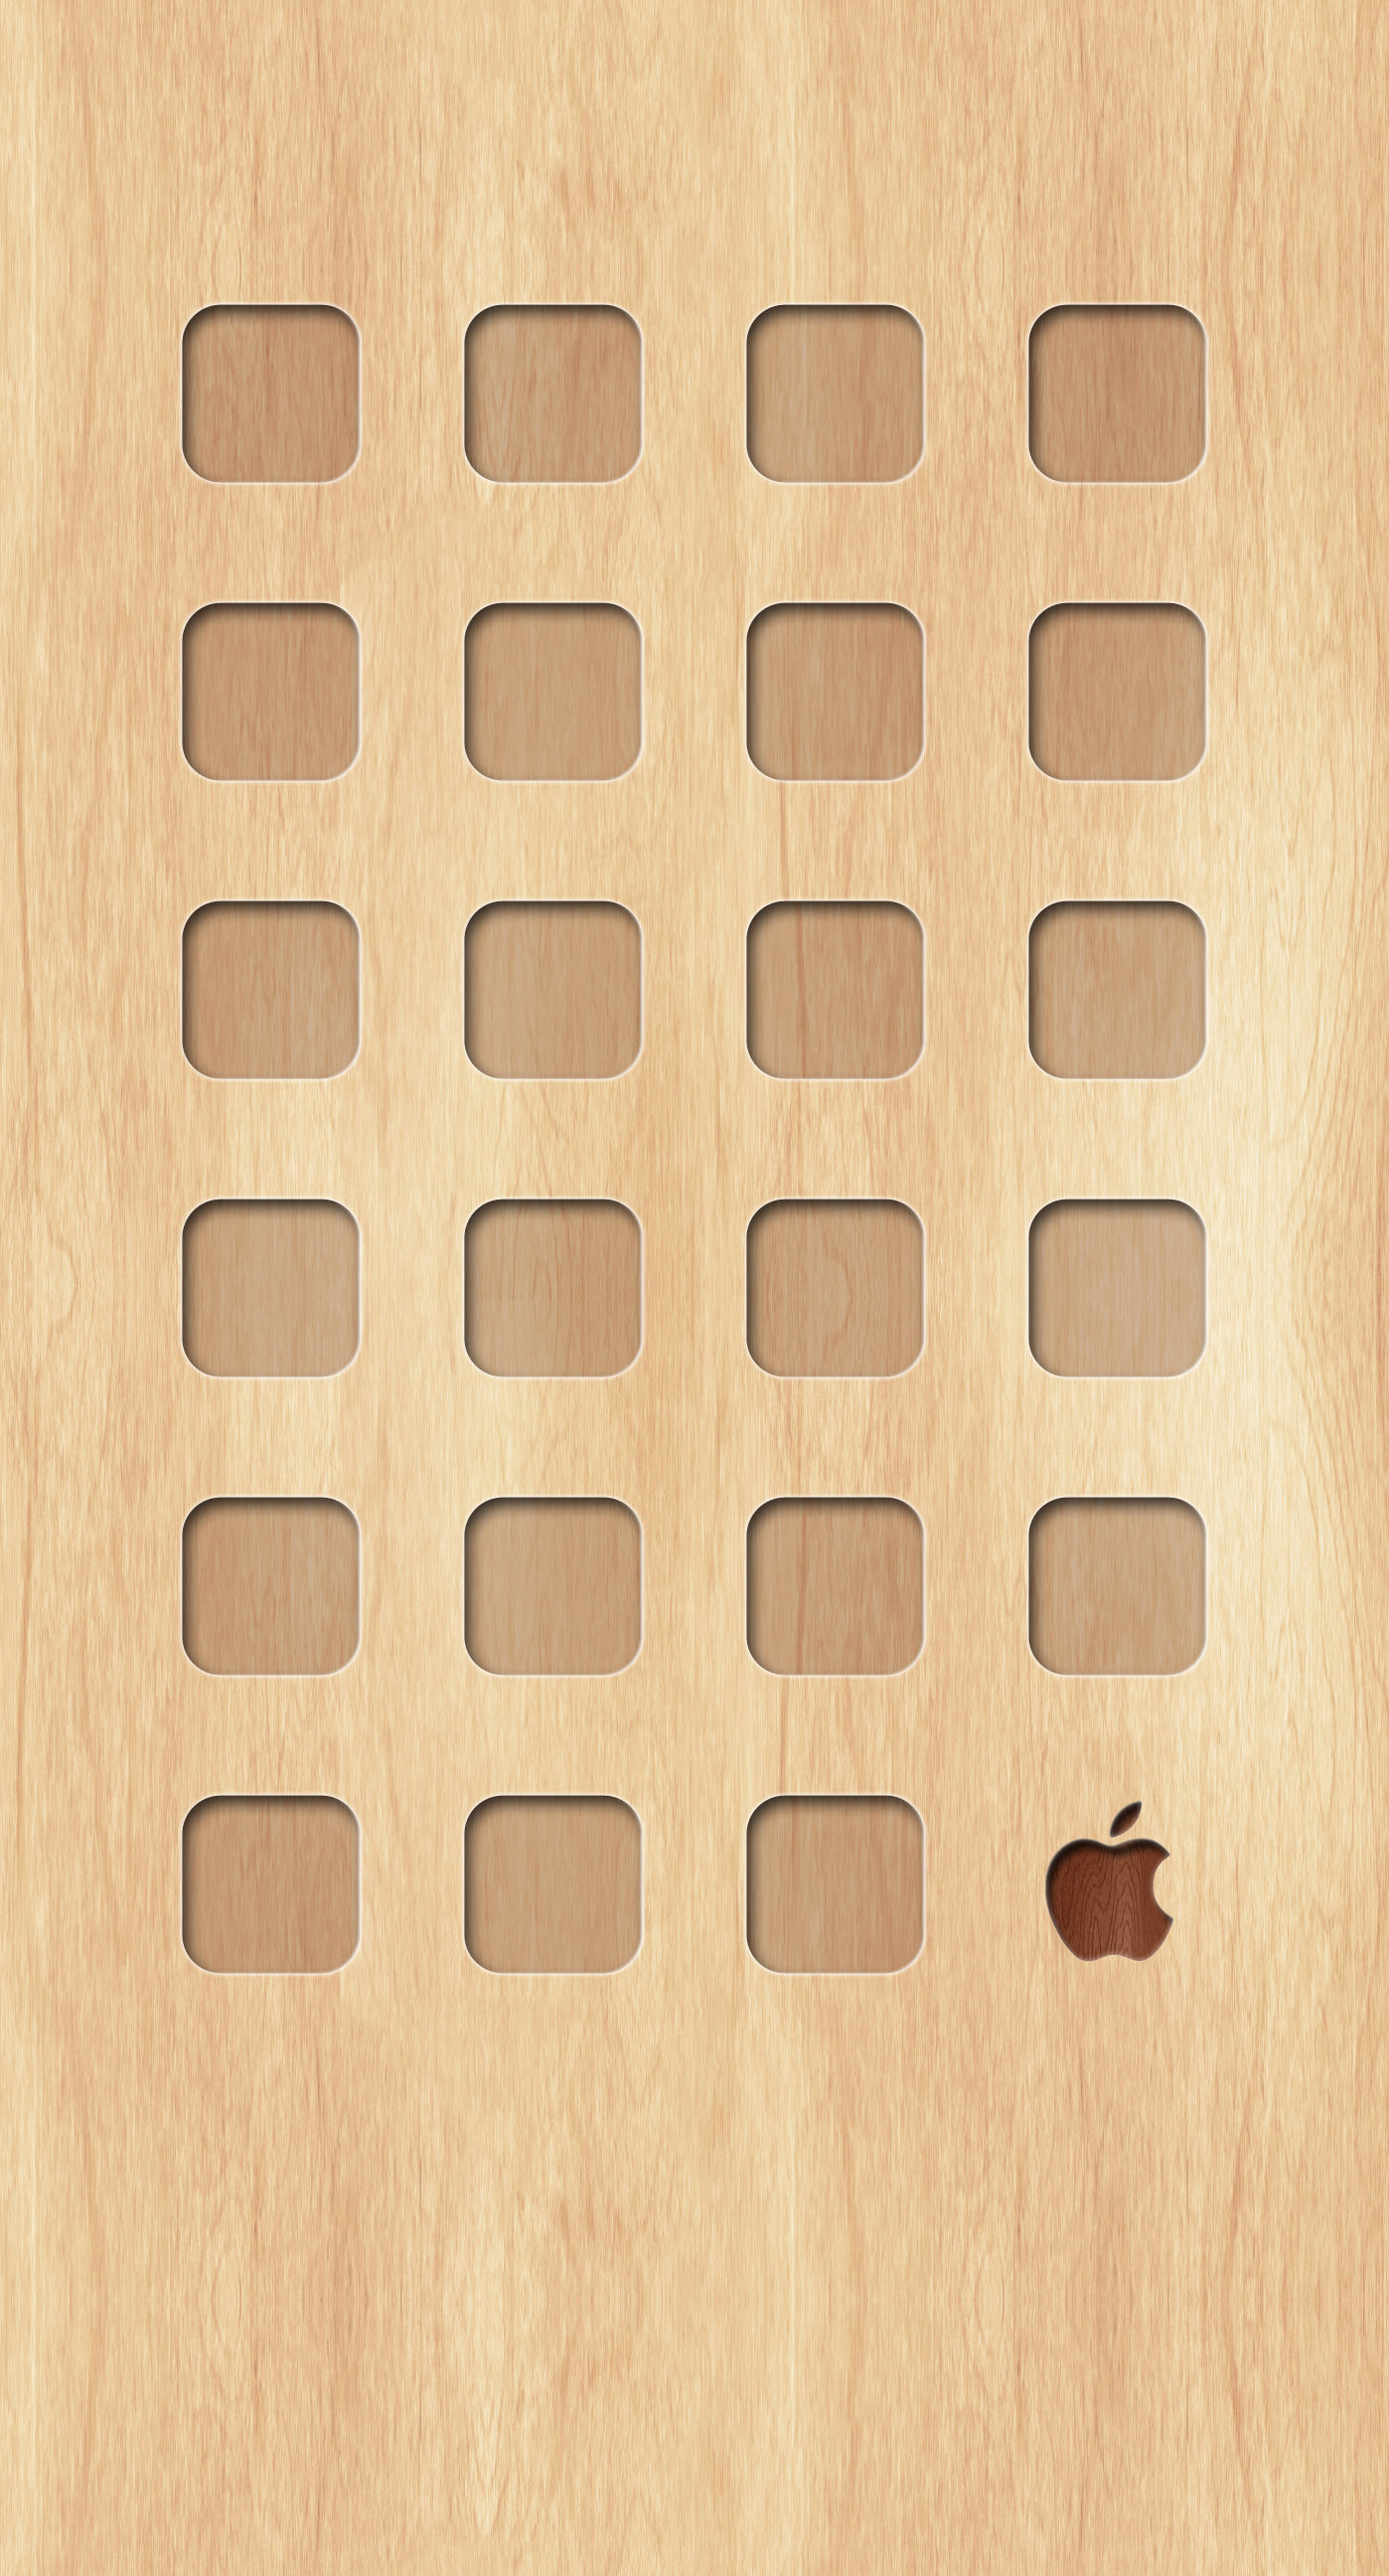 iPhone 7 Plus Wallpaper